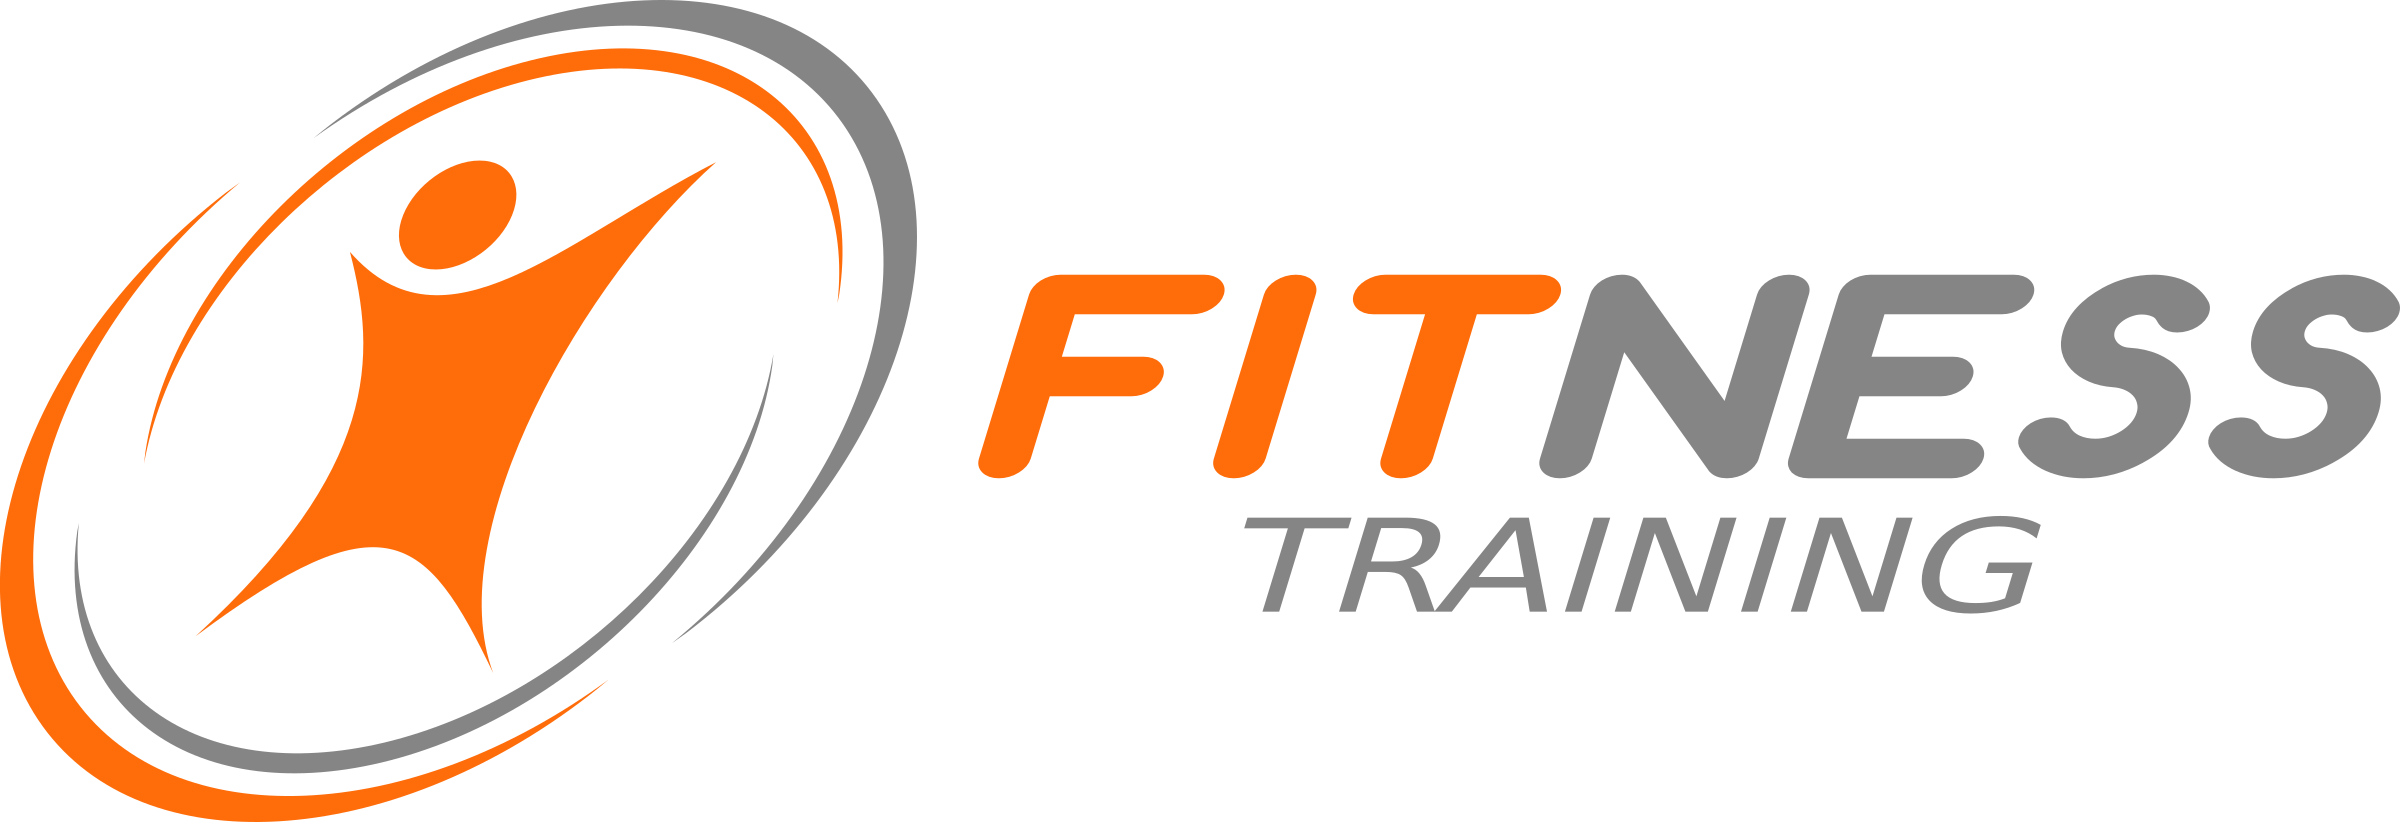 Free Fitness Logo Generator - Club, Coach, Apparel Logos